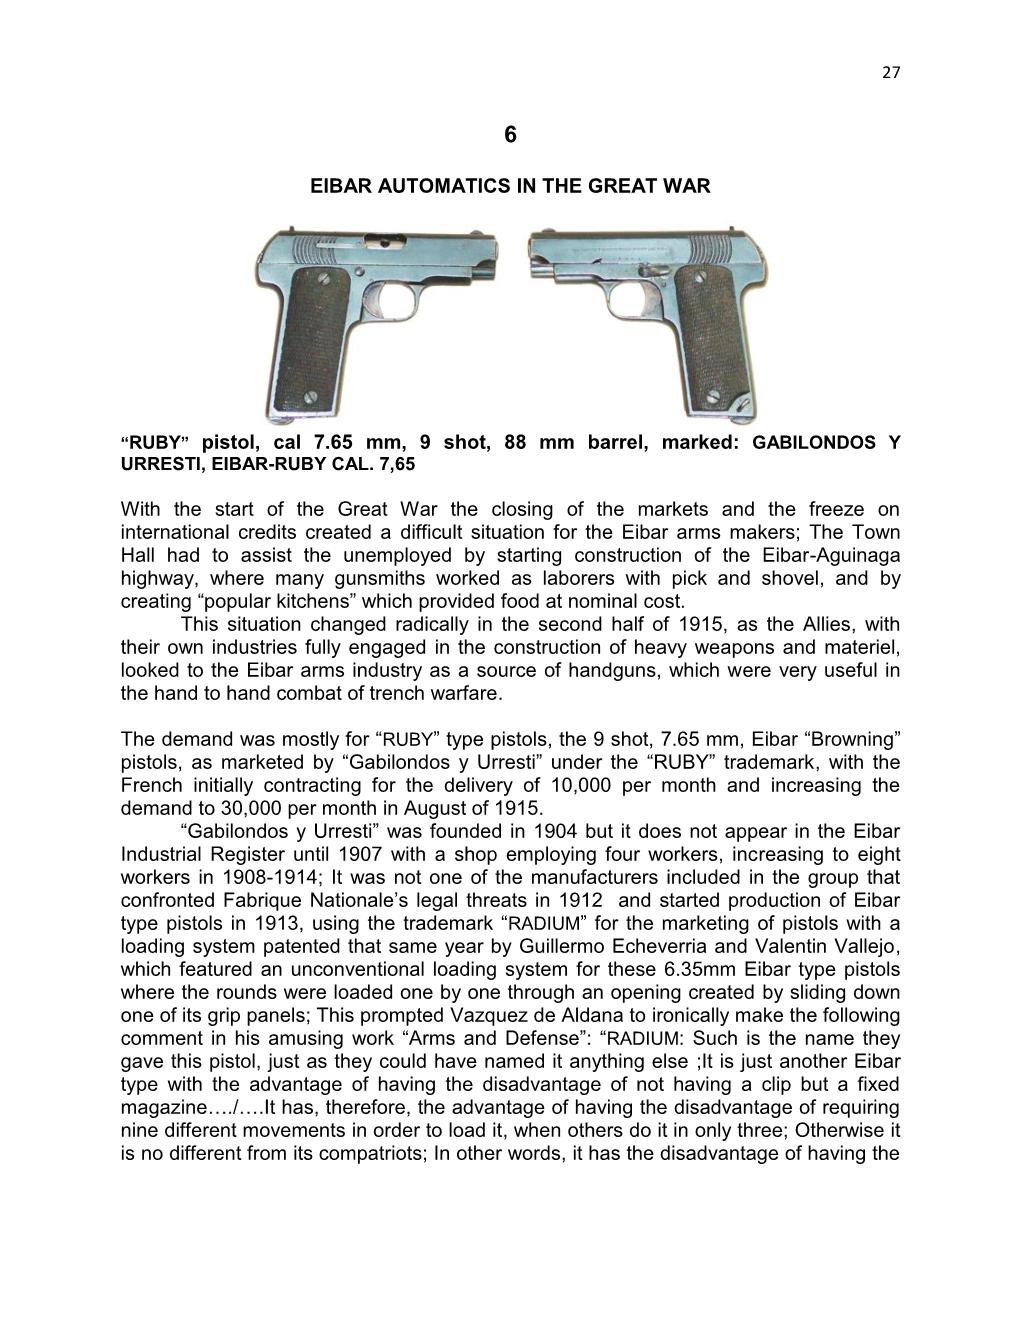 EIBAR AUTOMATICS in the GREAT WAR “RUBY” Pistol, Cal 7.65 Mm, 9